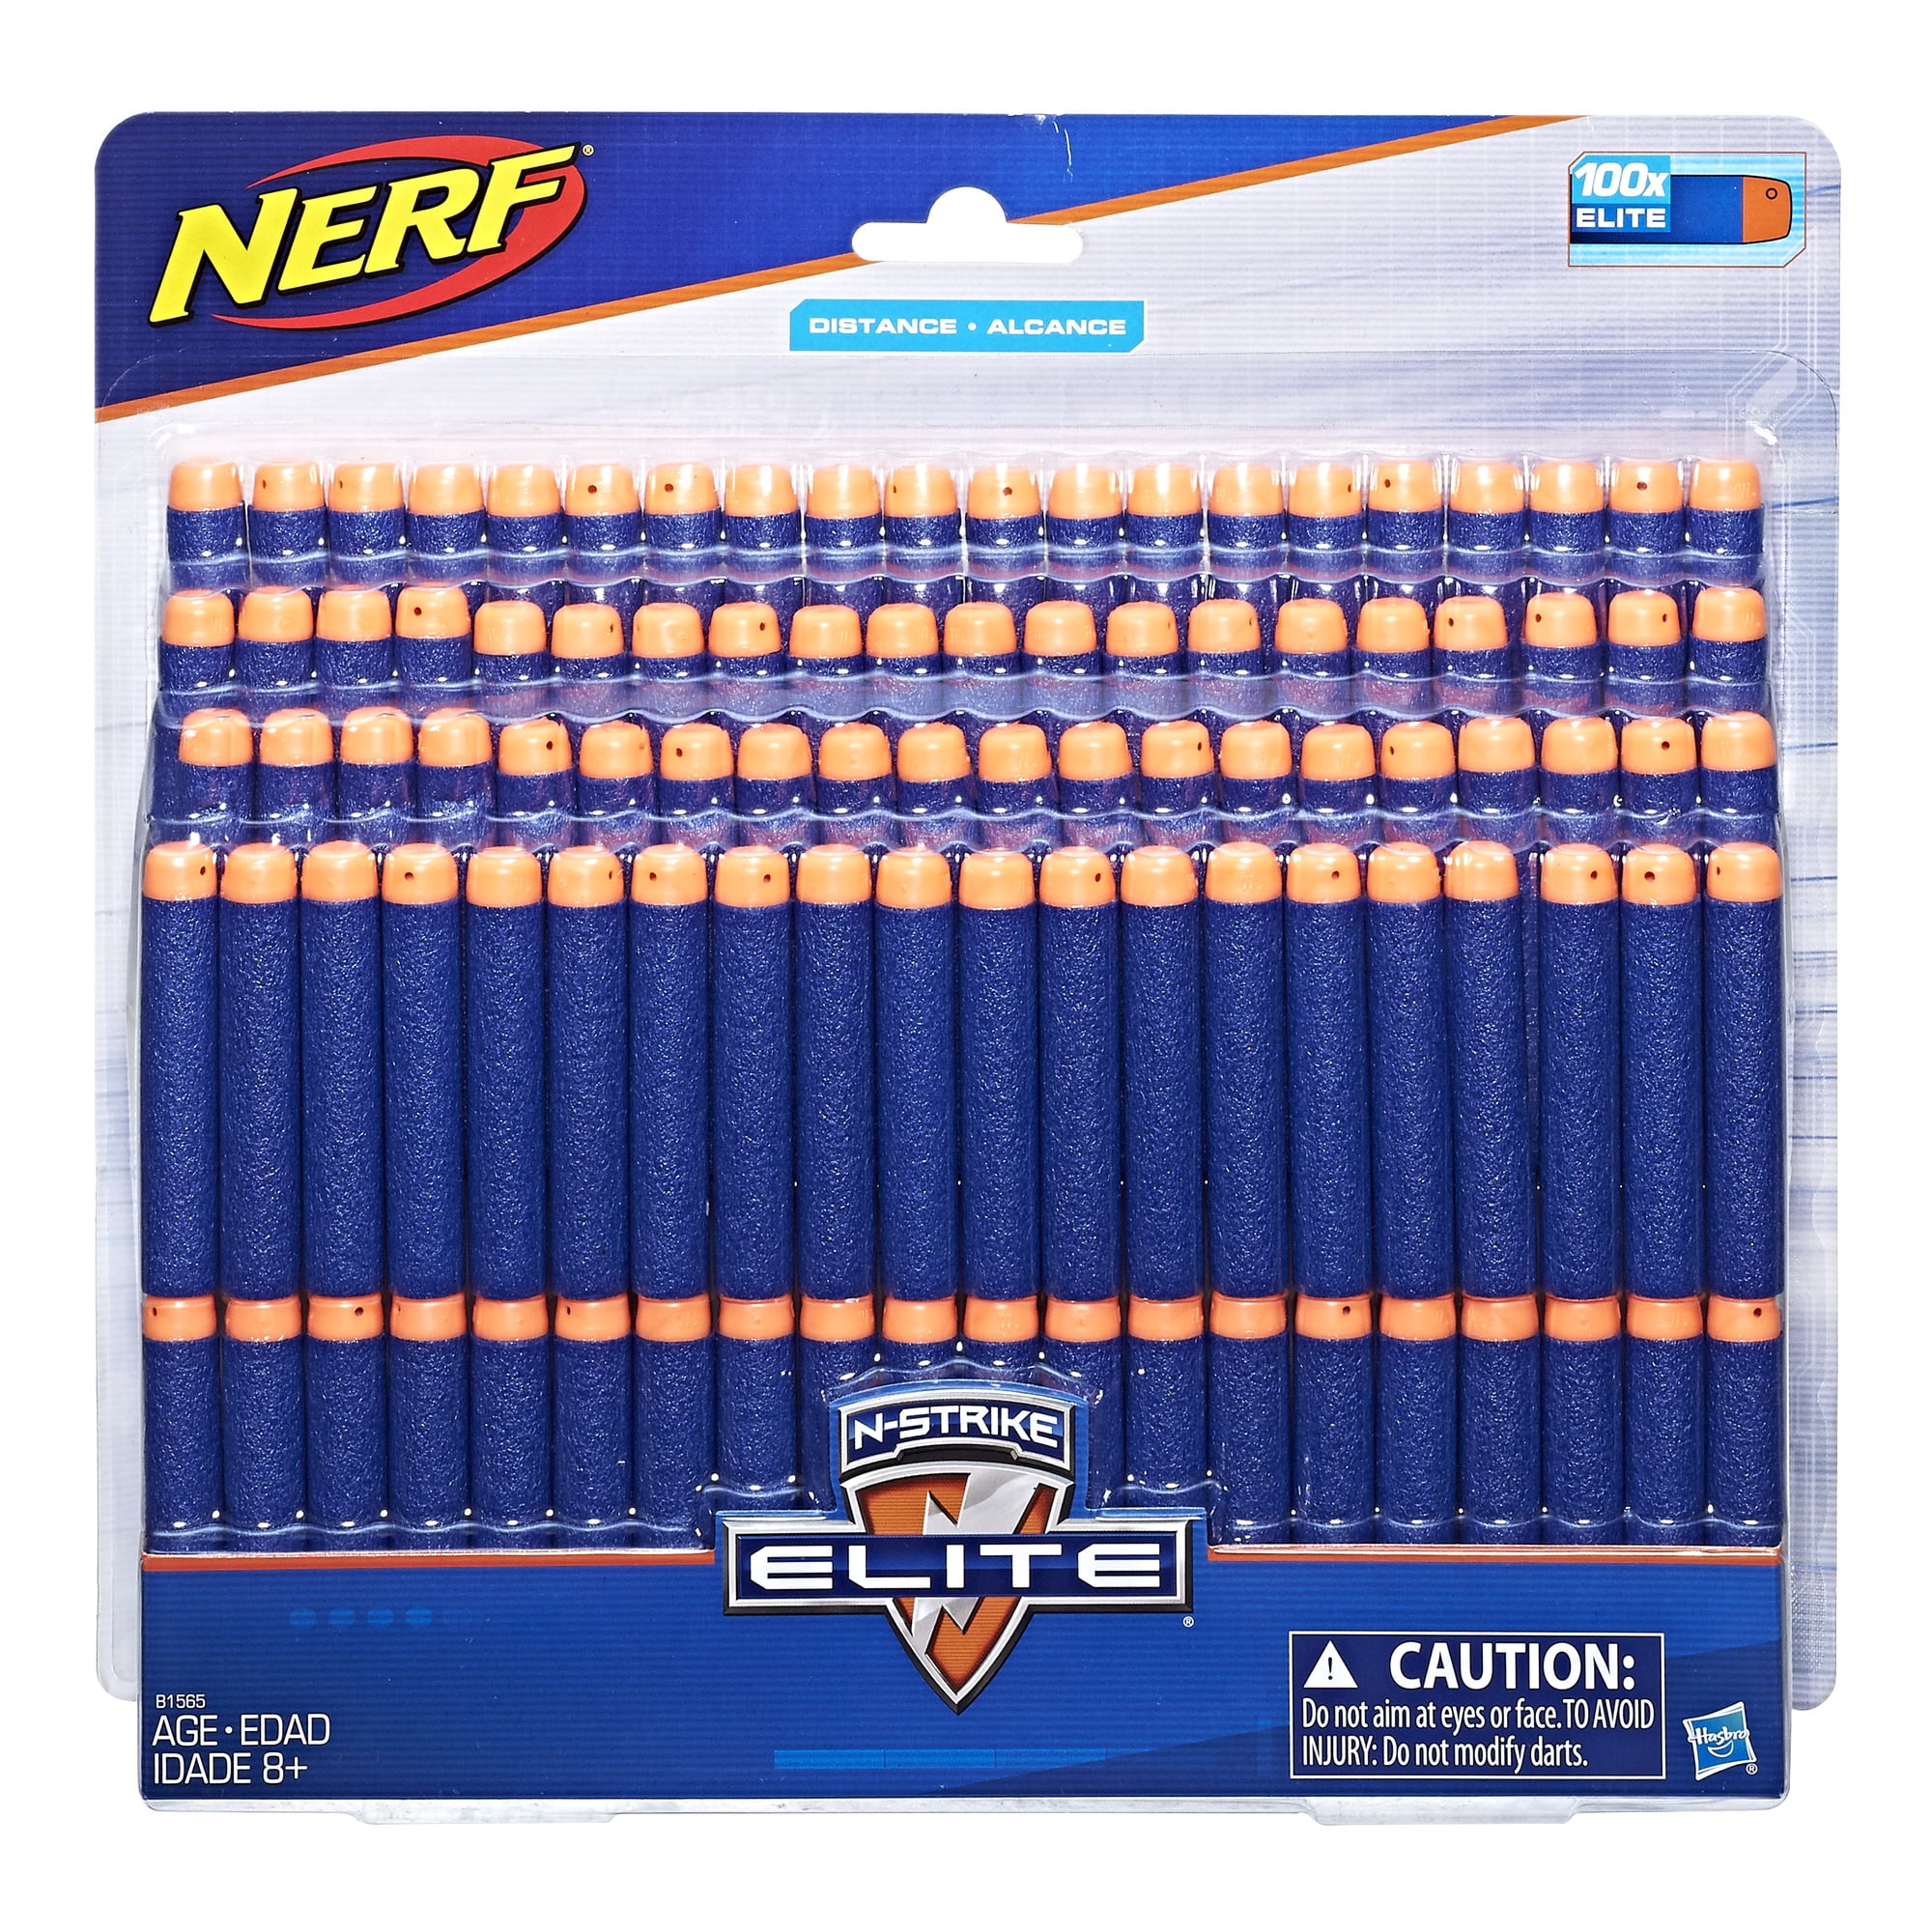 NERF N-STRIKE ELITE 30 Dart REFILL Genuine Sealed NERF Darts A0351 Ammo Bullets 